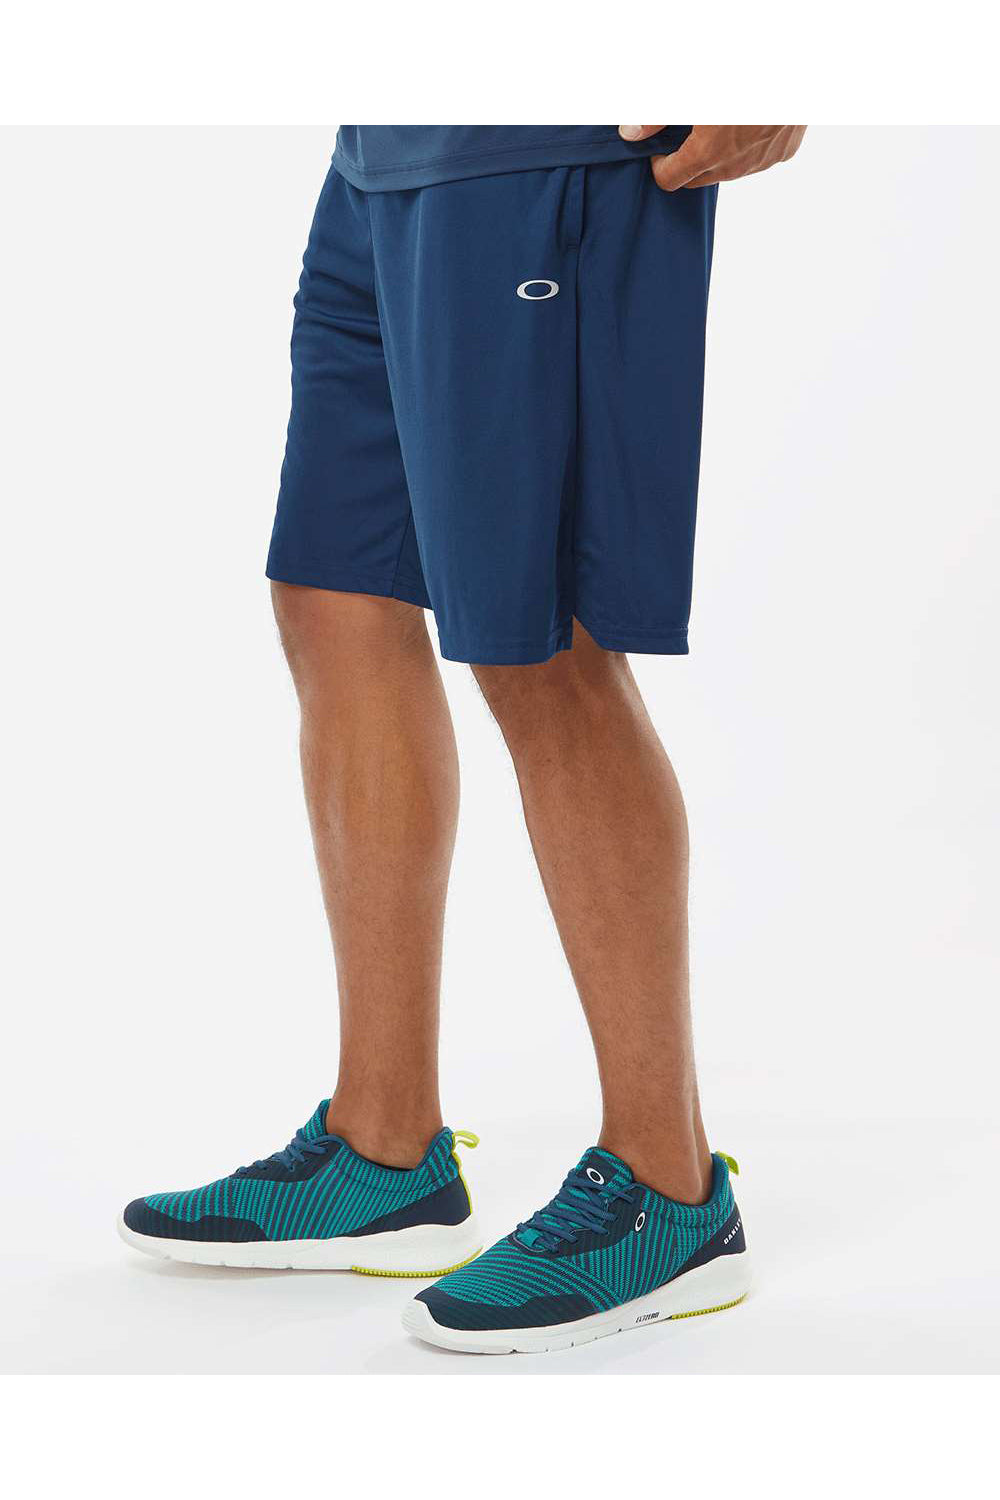 Oakley FOA402995 Mens Team Issue Hydrolix Shorts w/ Pockets Team Navy Blue Model Side